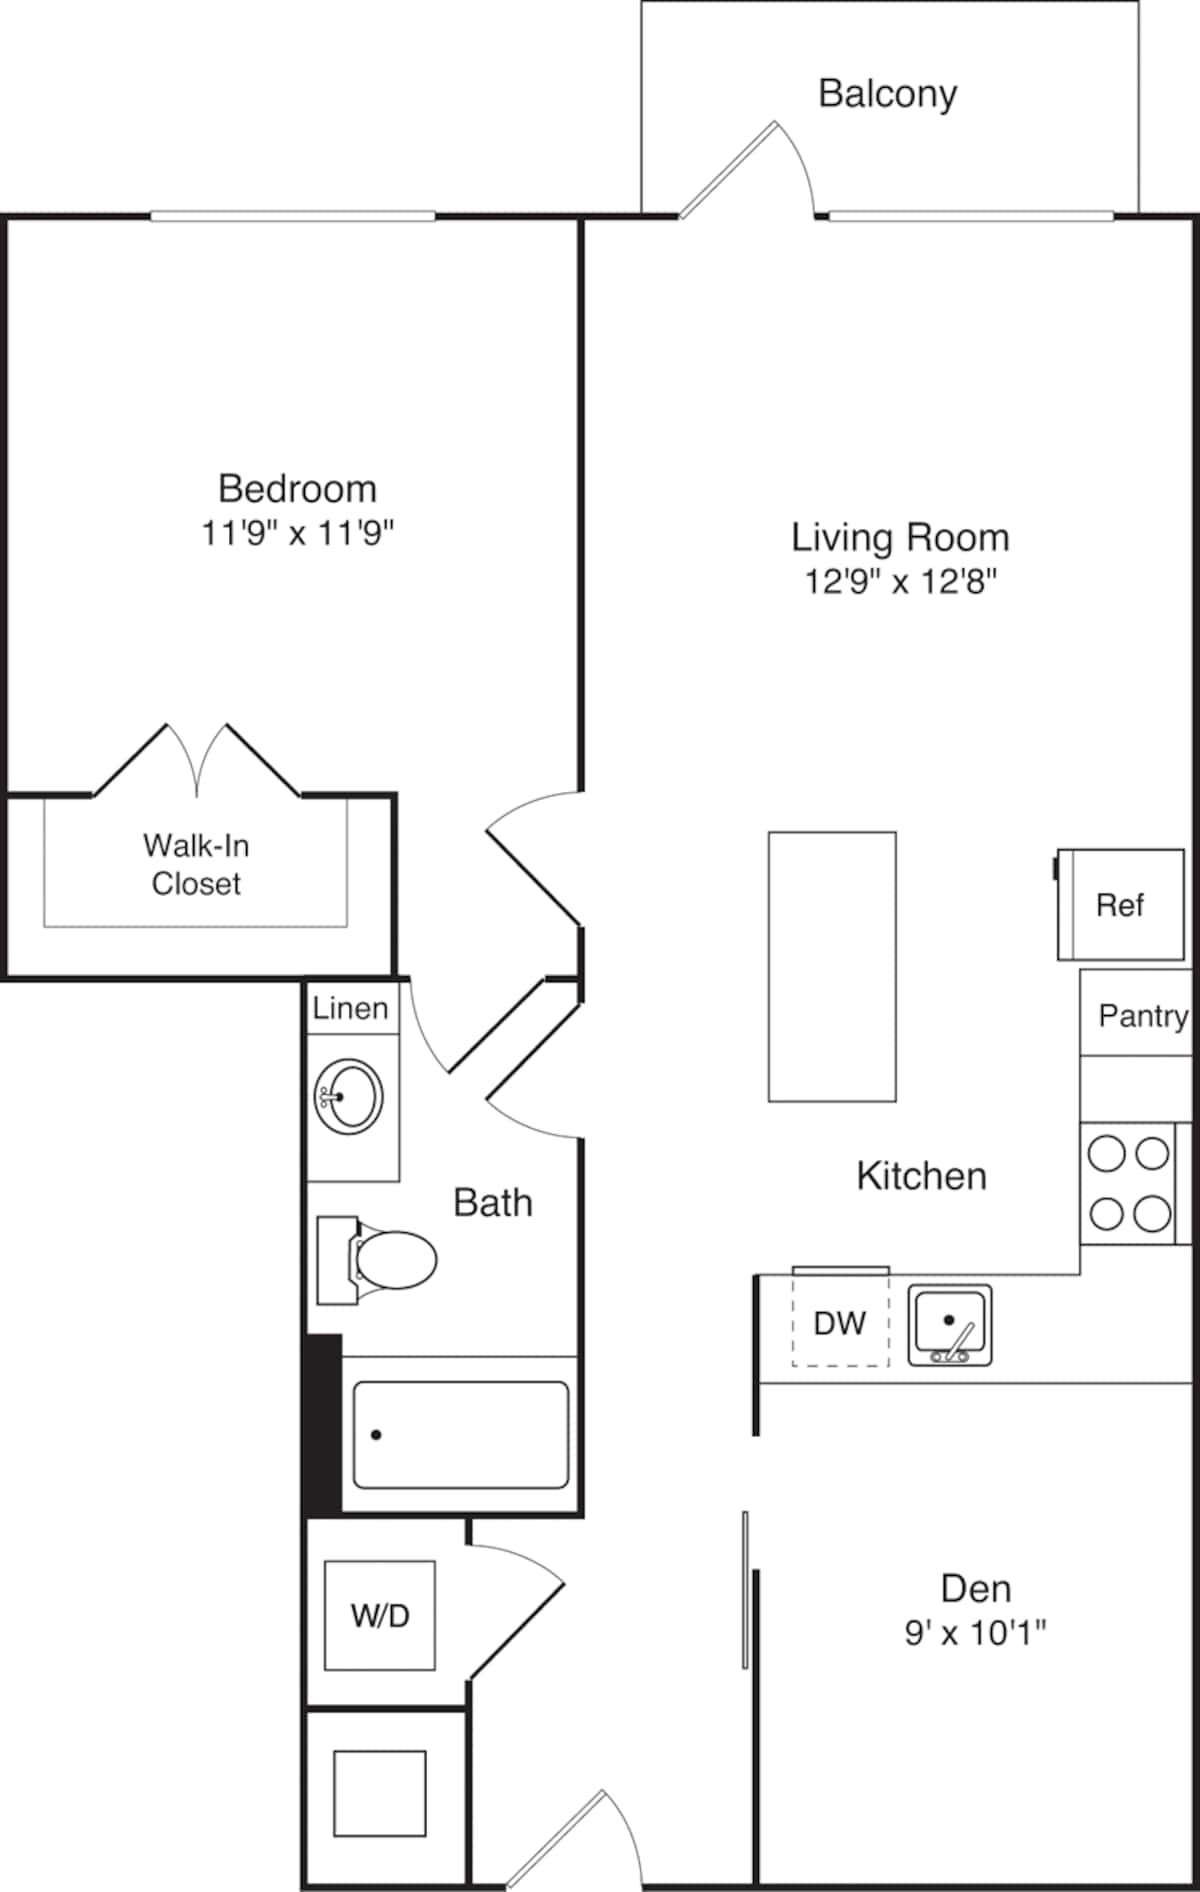 Floorplan diagram for A15, showing 1 bedroom